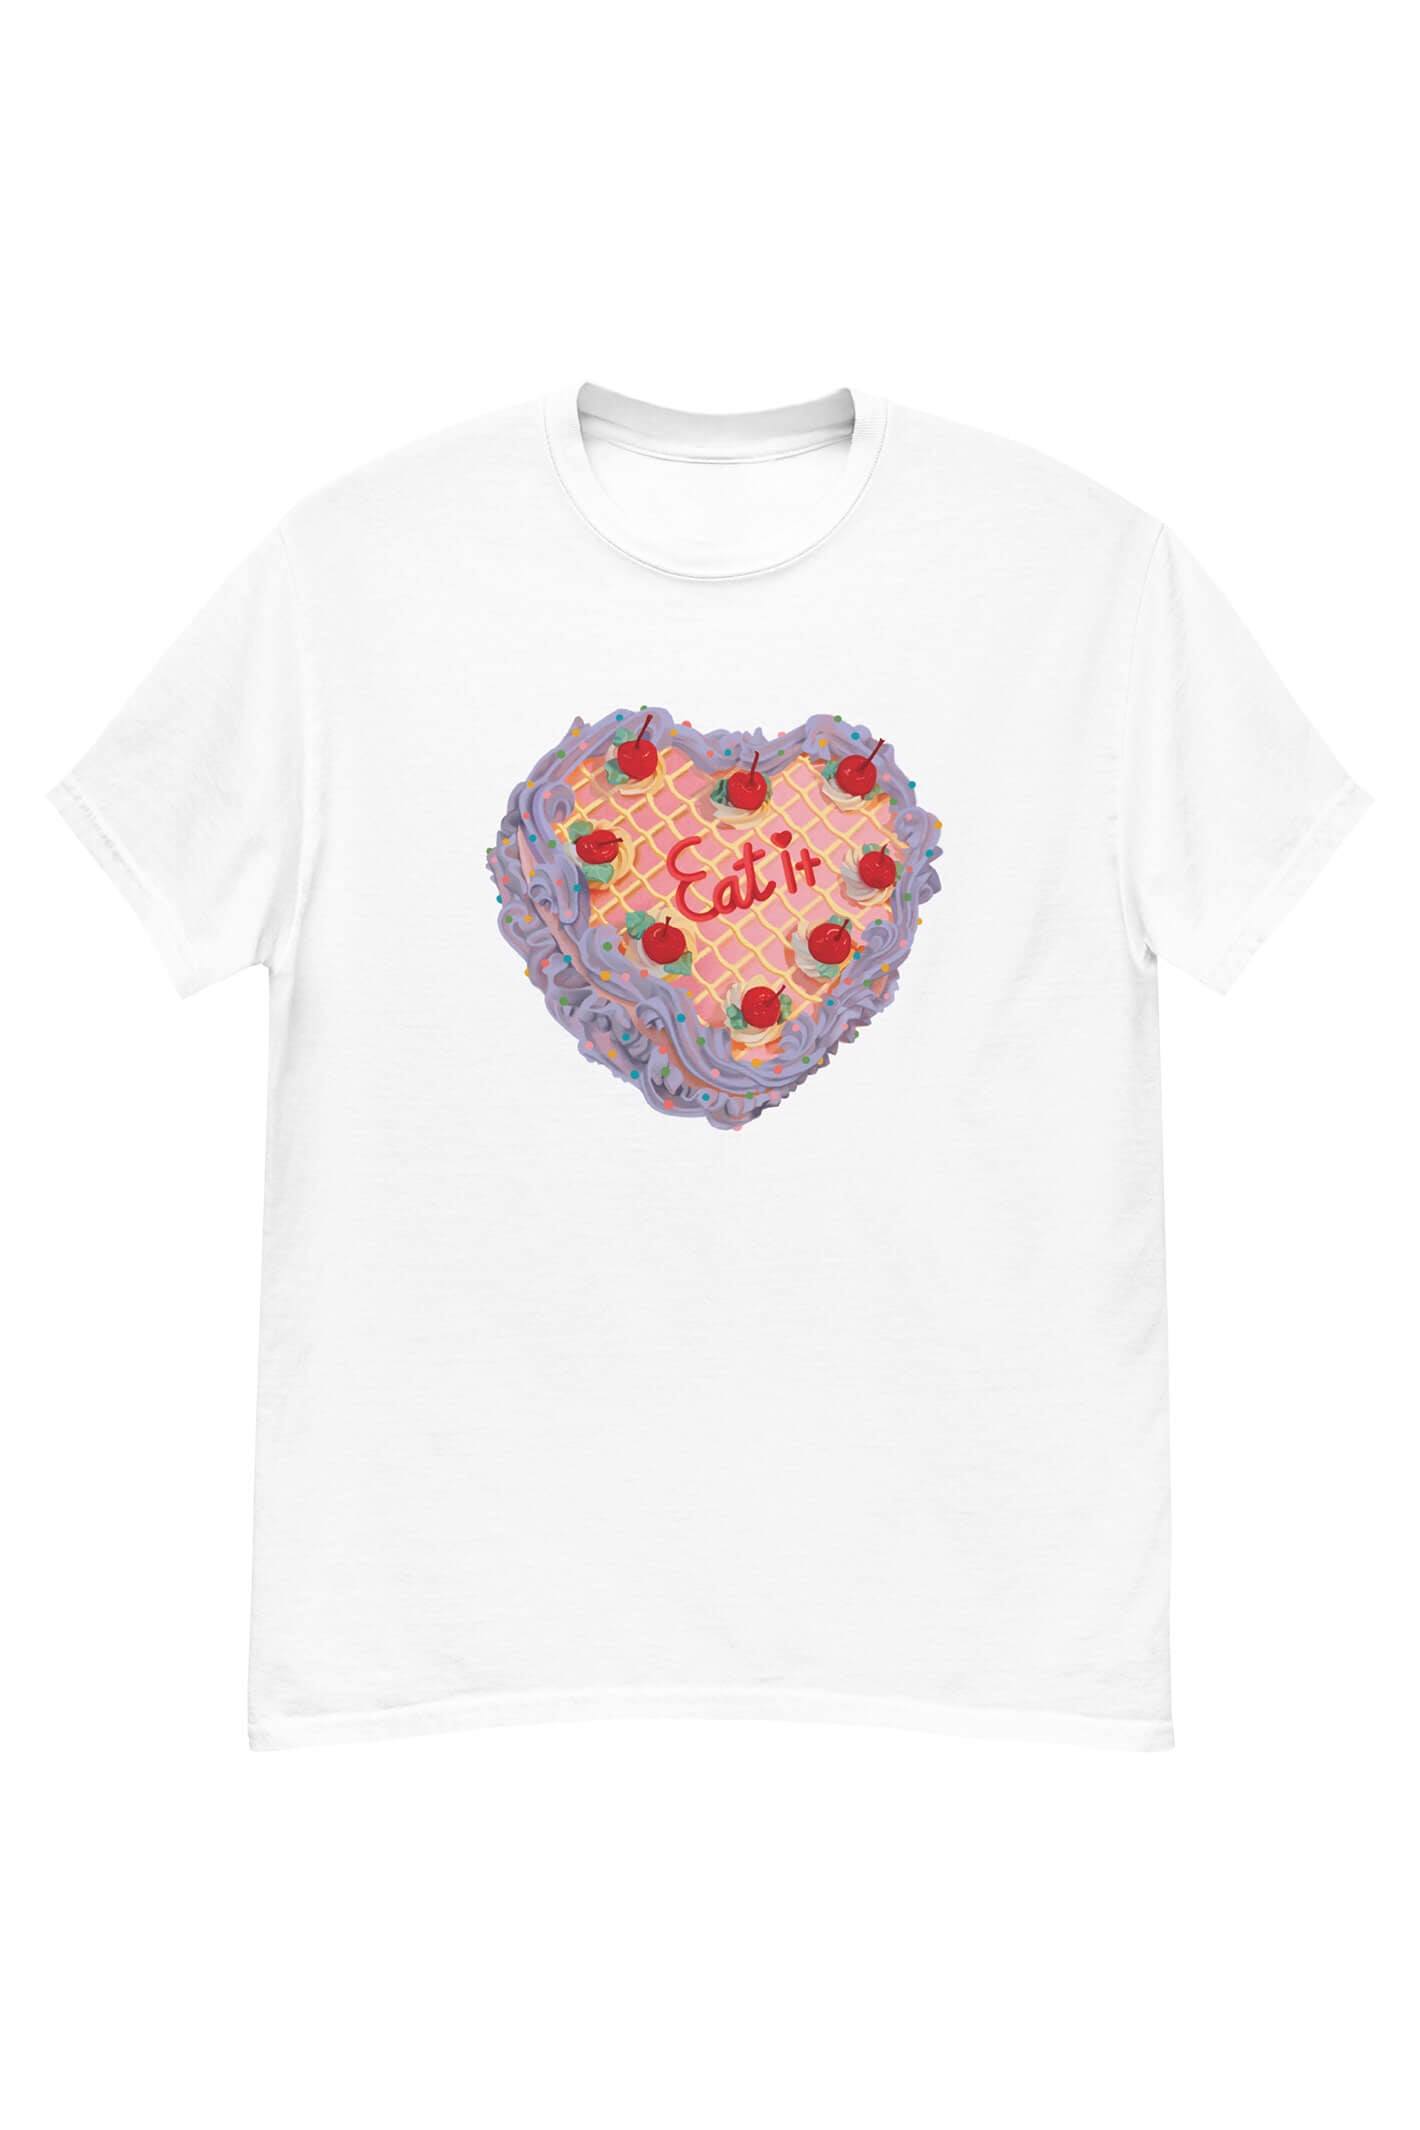 Eat it kawaii retro cake t-shirt.